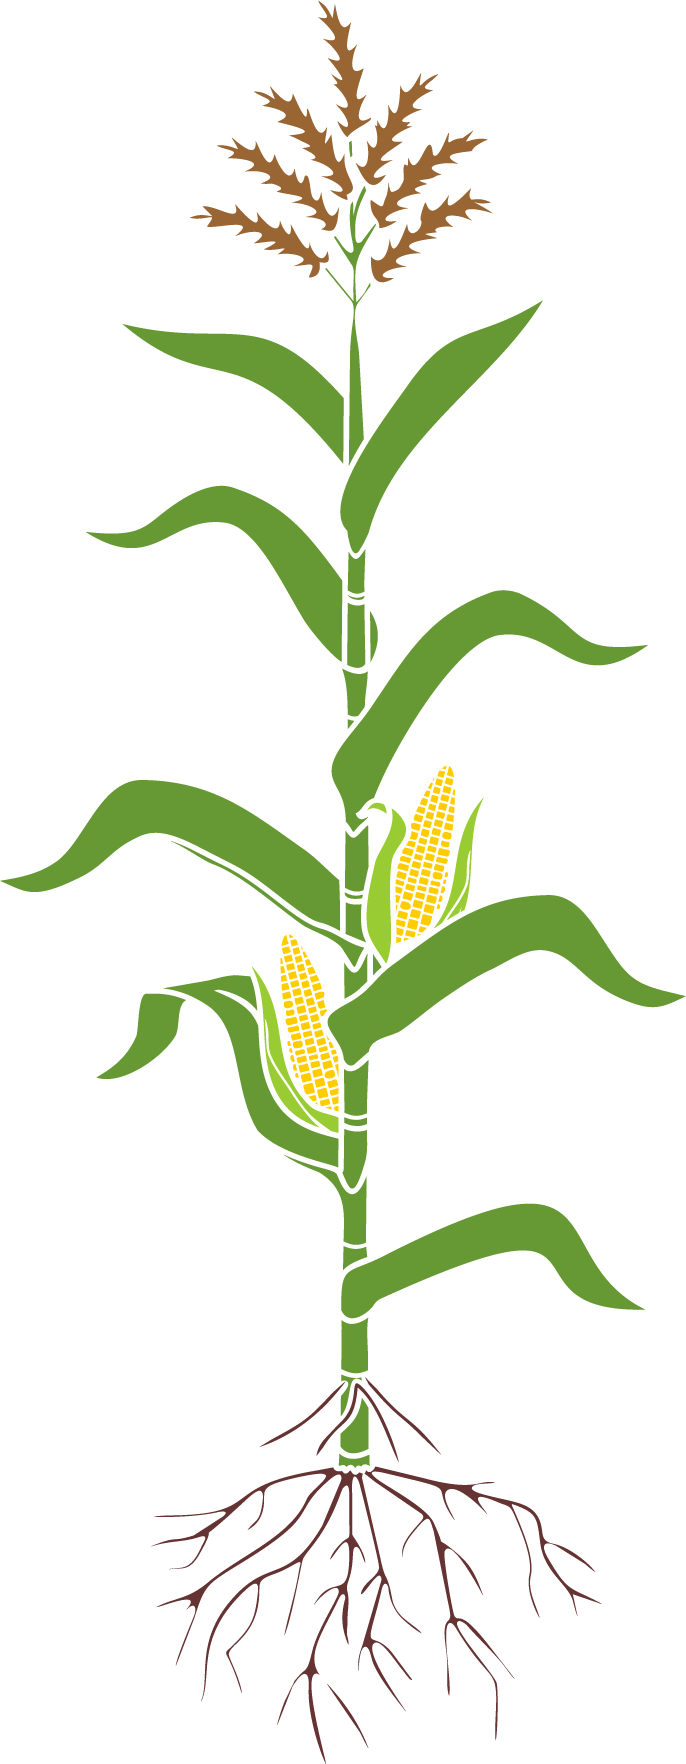 AdobeStock_265768973_corn-plant